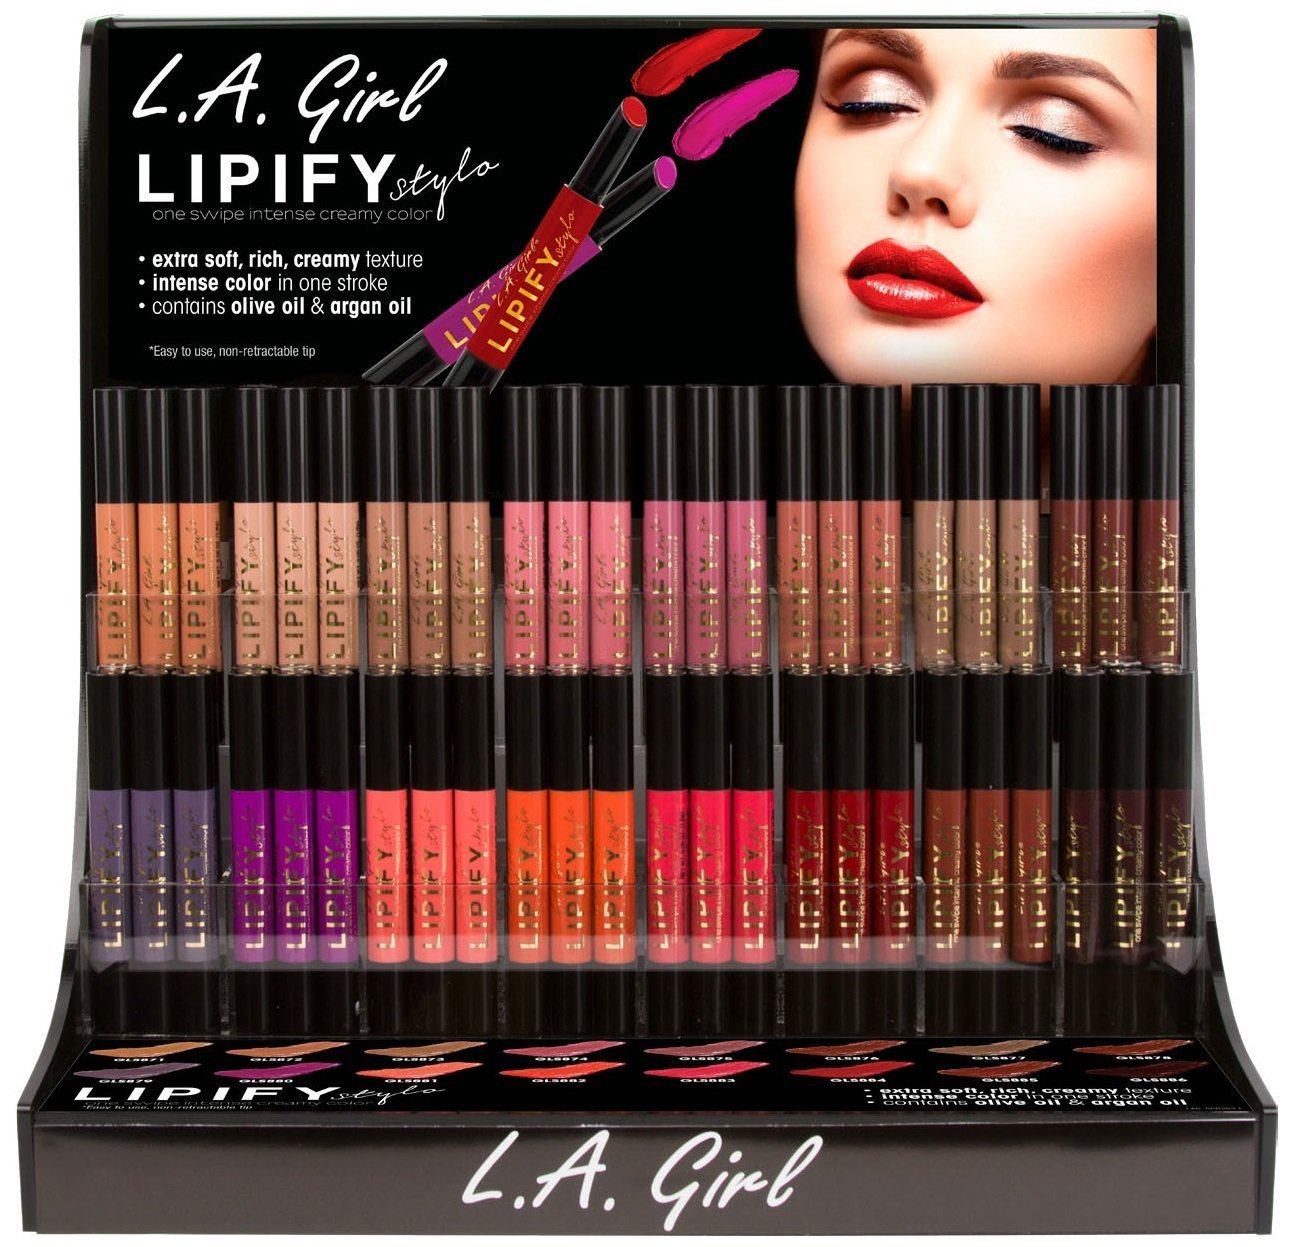 LA Girl Lipify Stylo Set/Display #GCD263.1 (144PC)